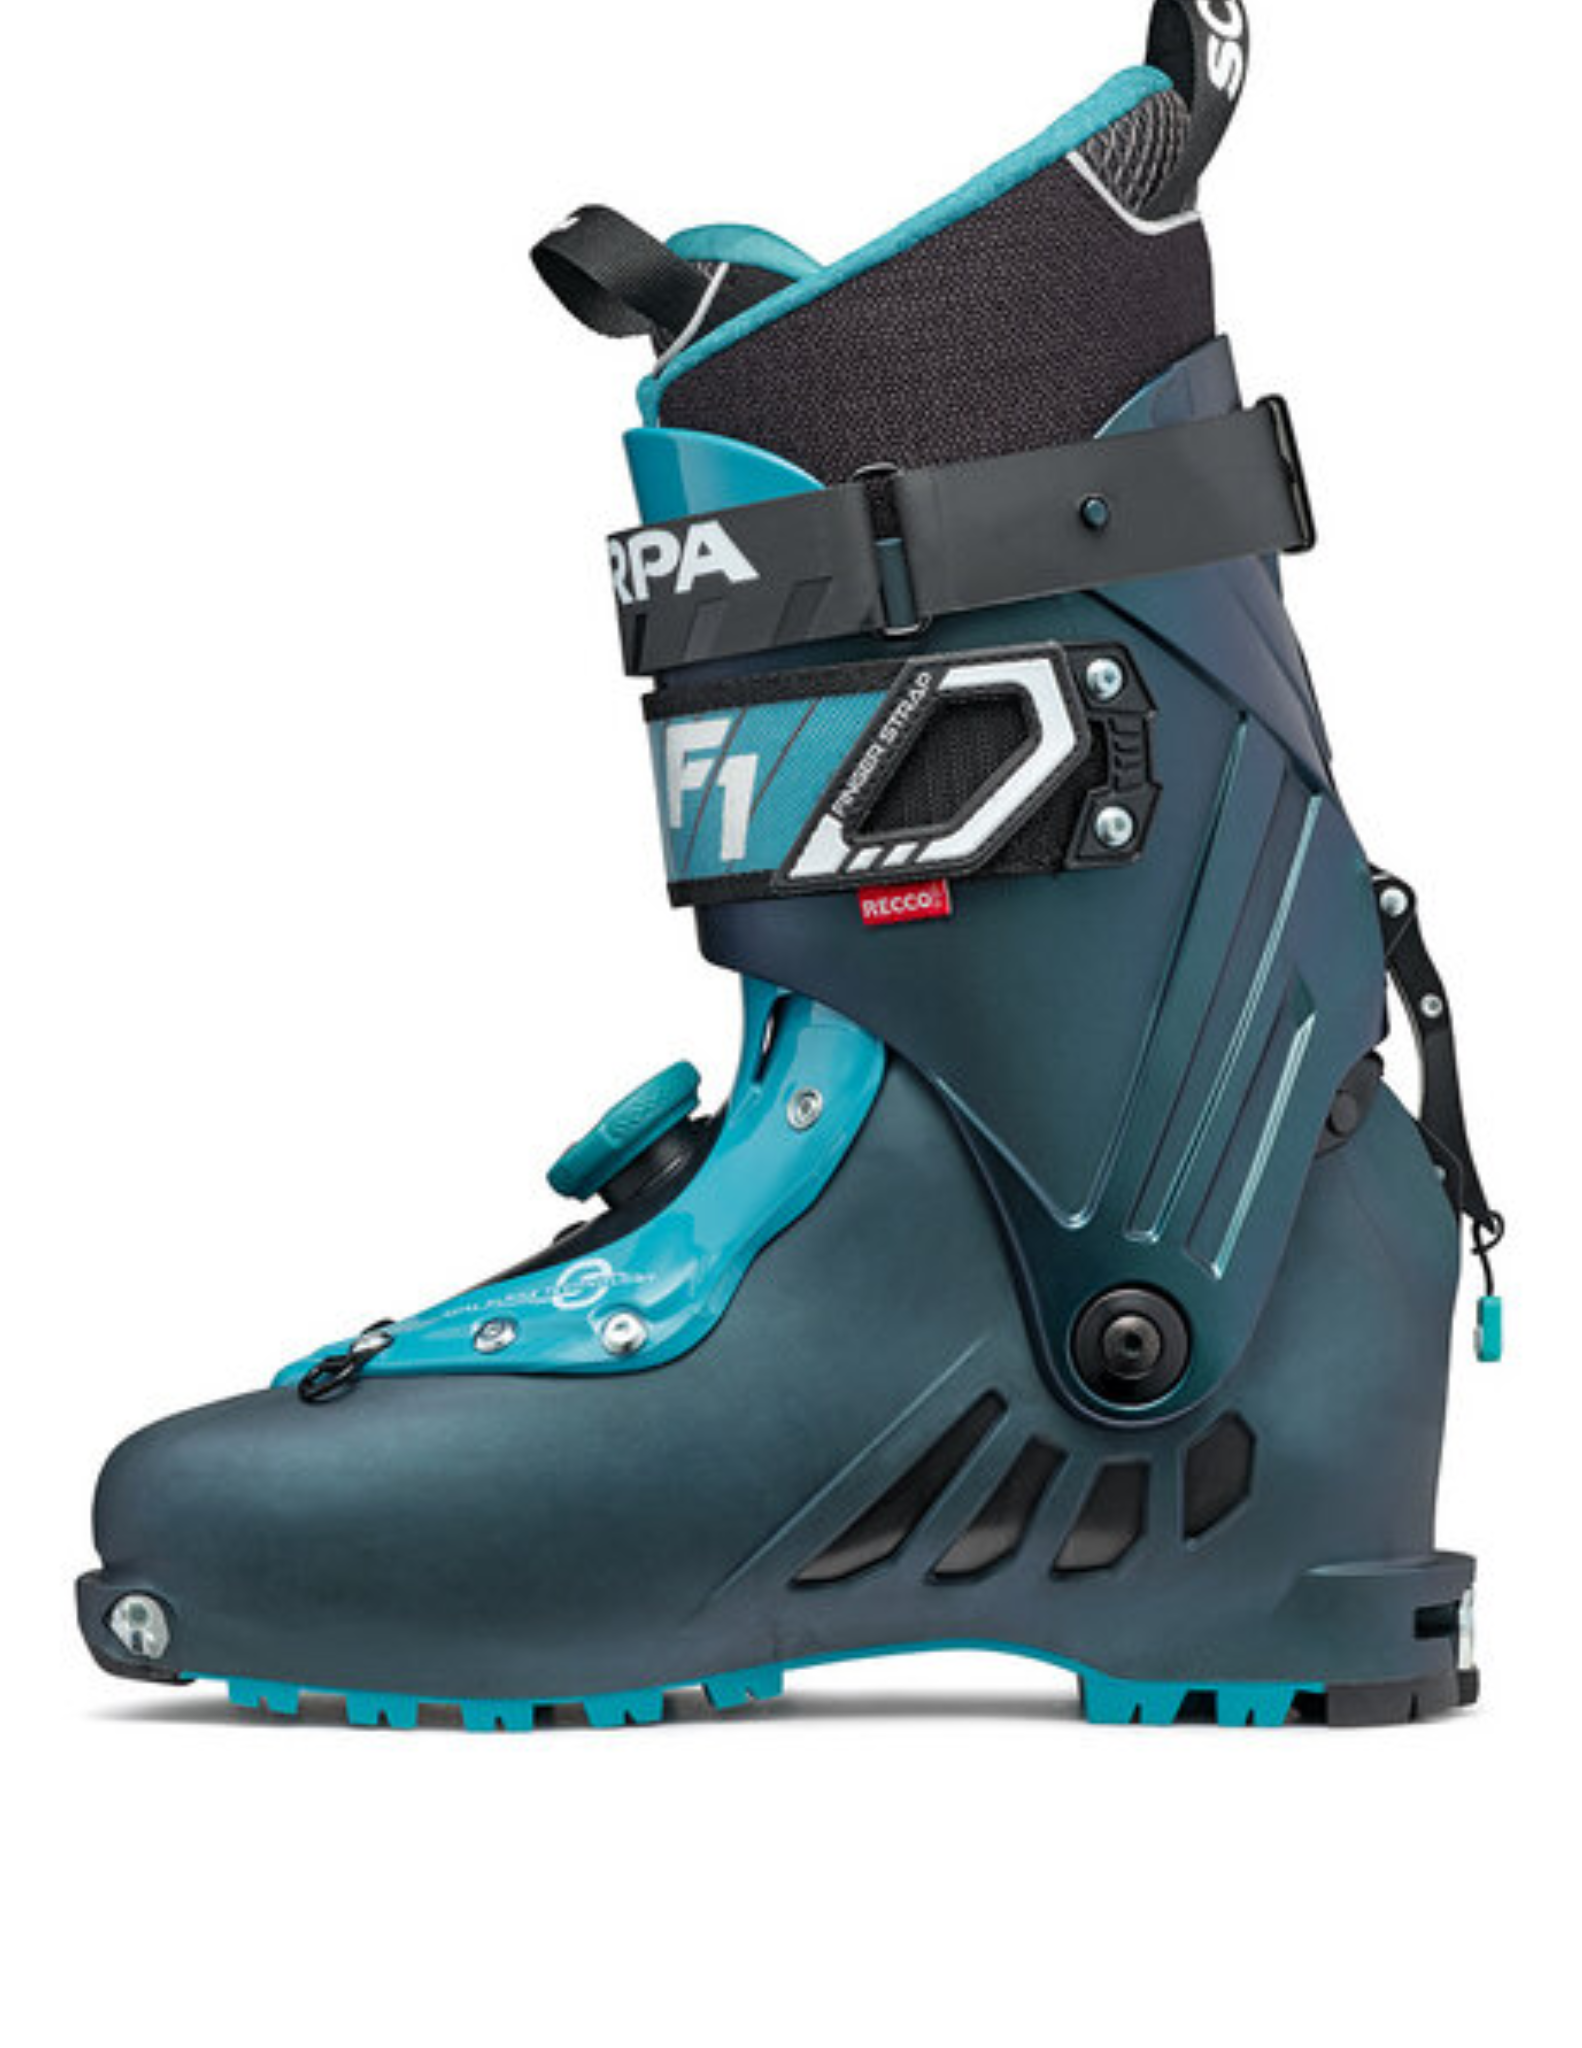 Chaussures de Ski de Rando Scarpa F1 Homme